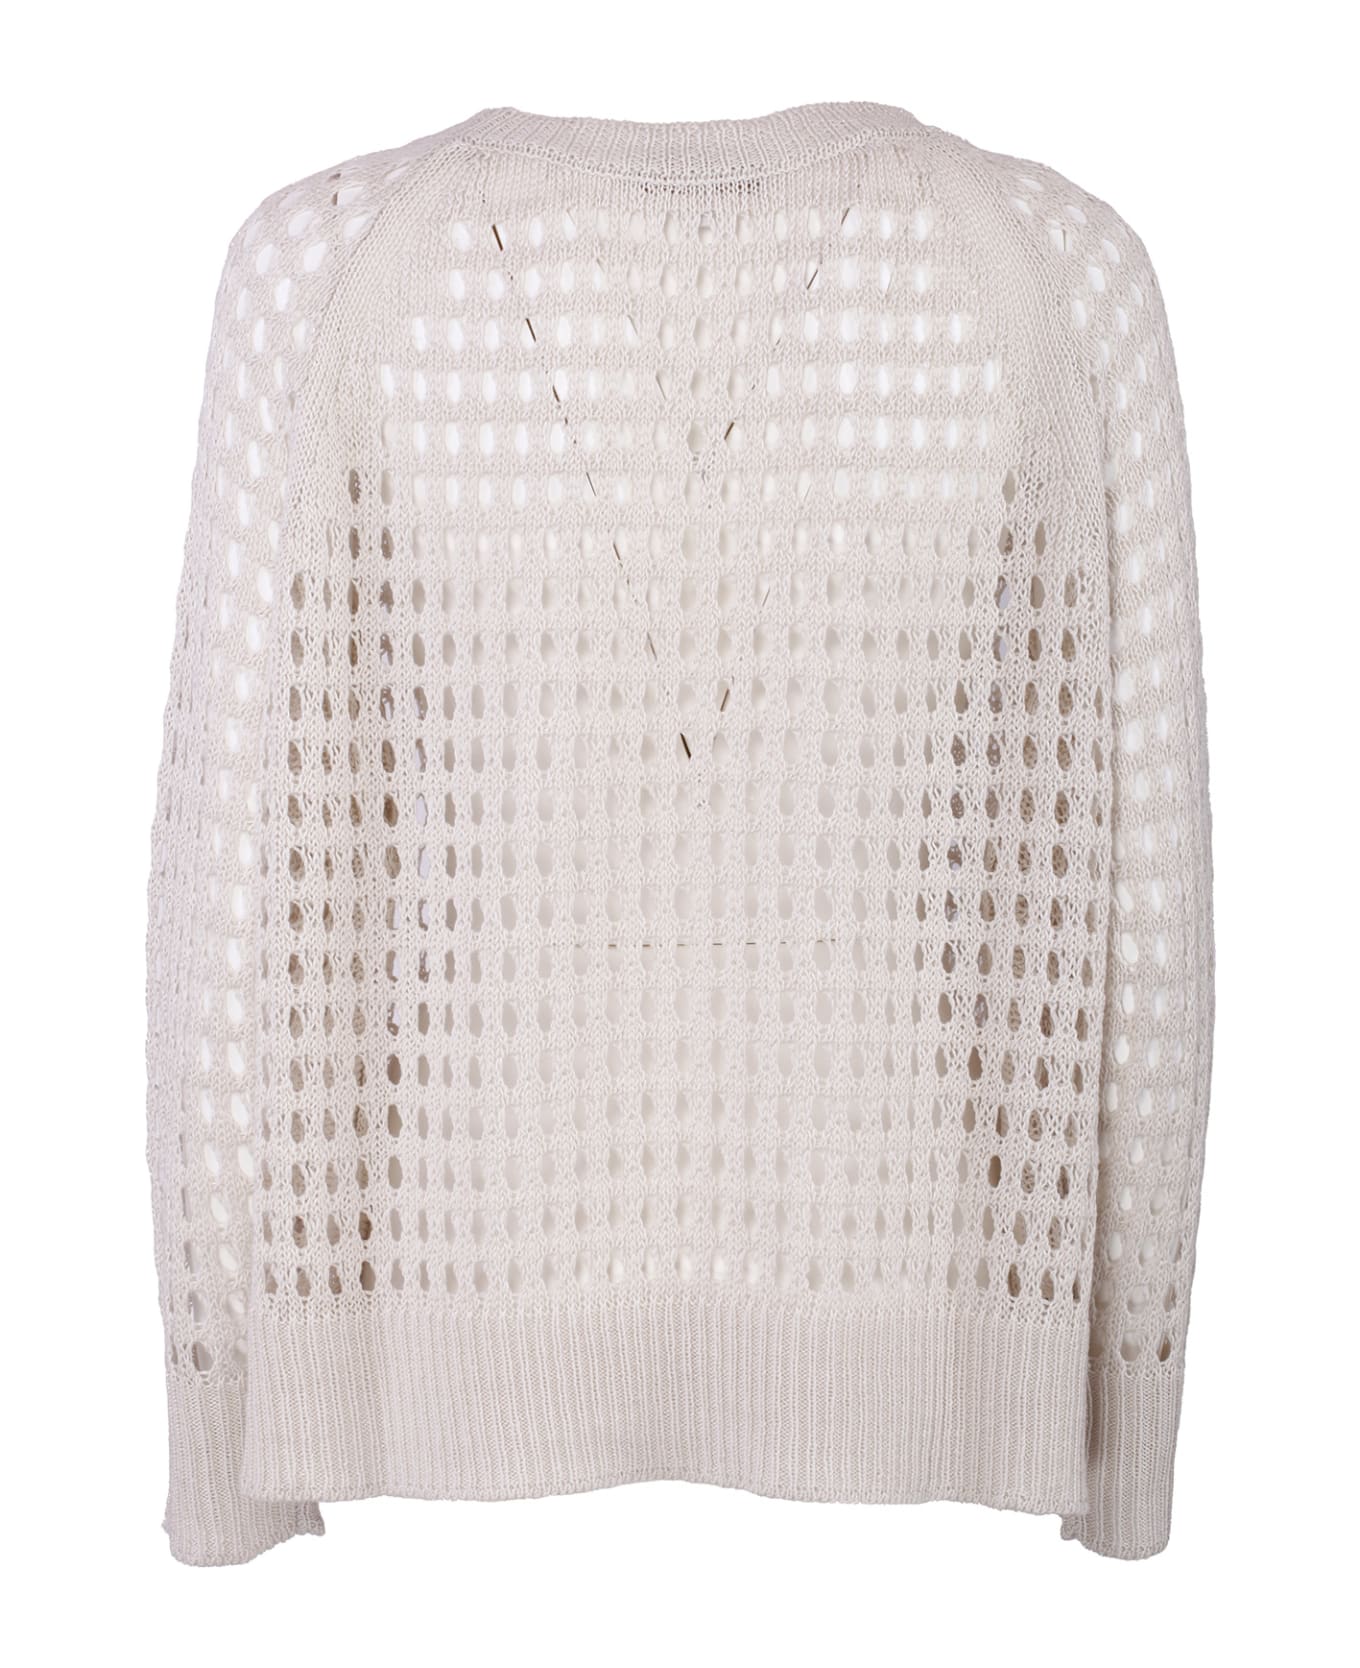 Antonelli Firenze Sweaters Beige - Beige